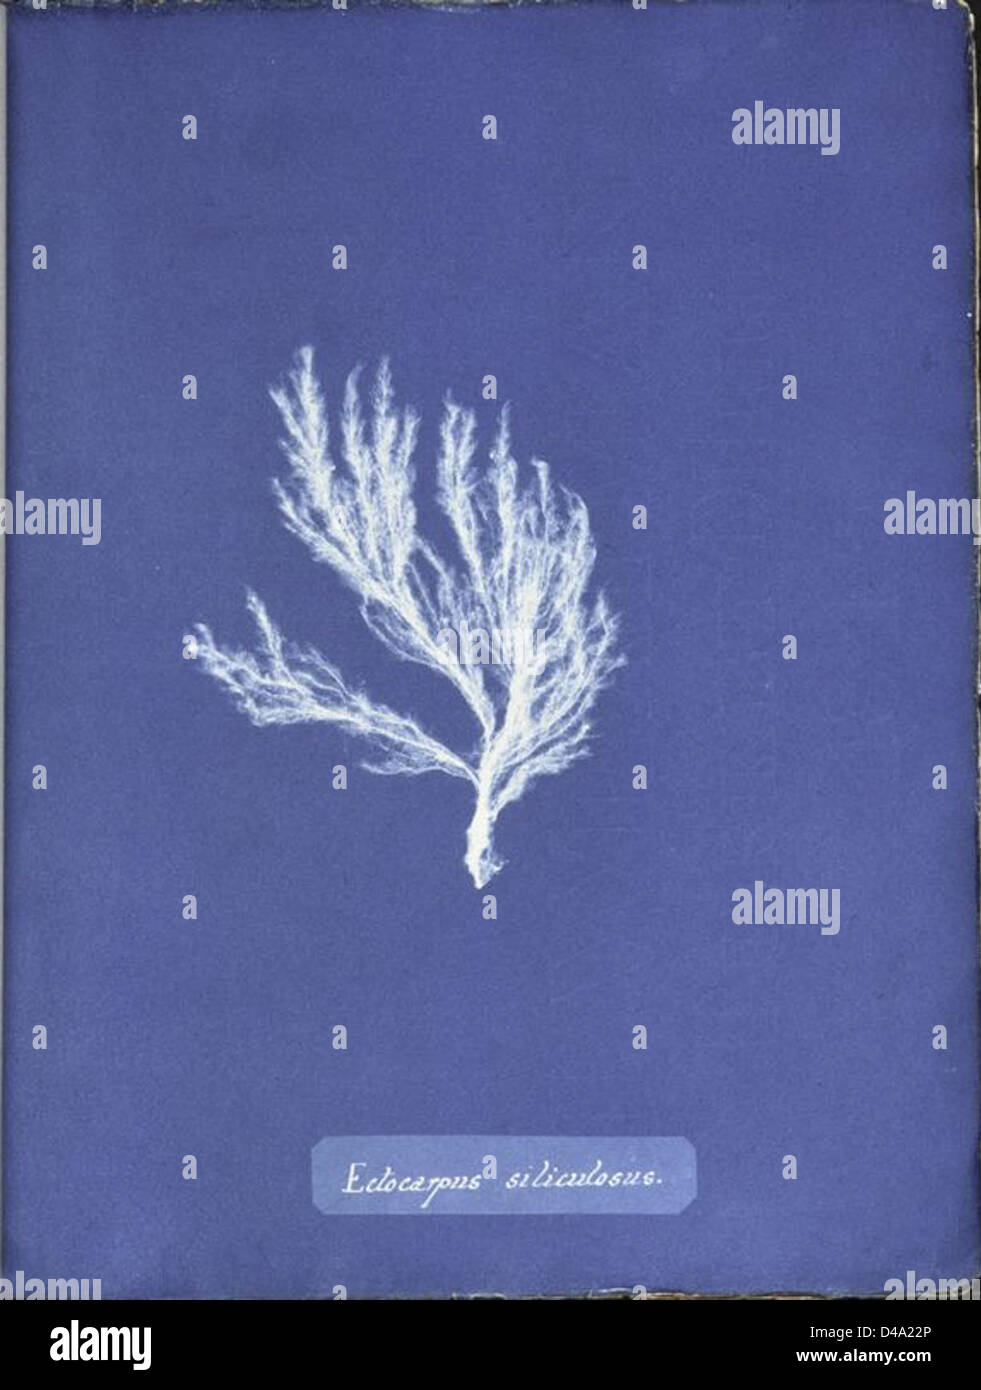 Ectocarpus siliculosus. Stock Photo